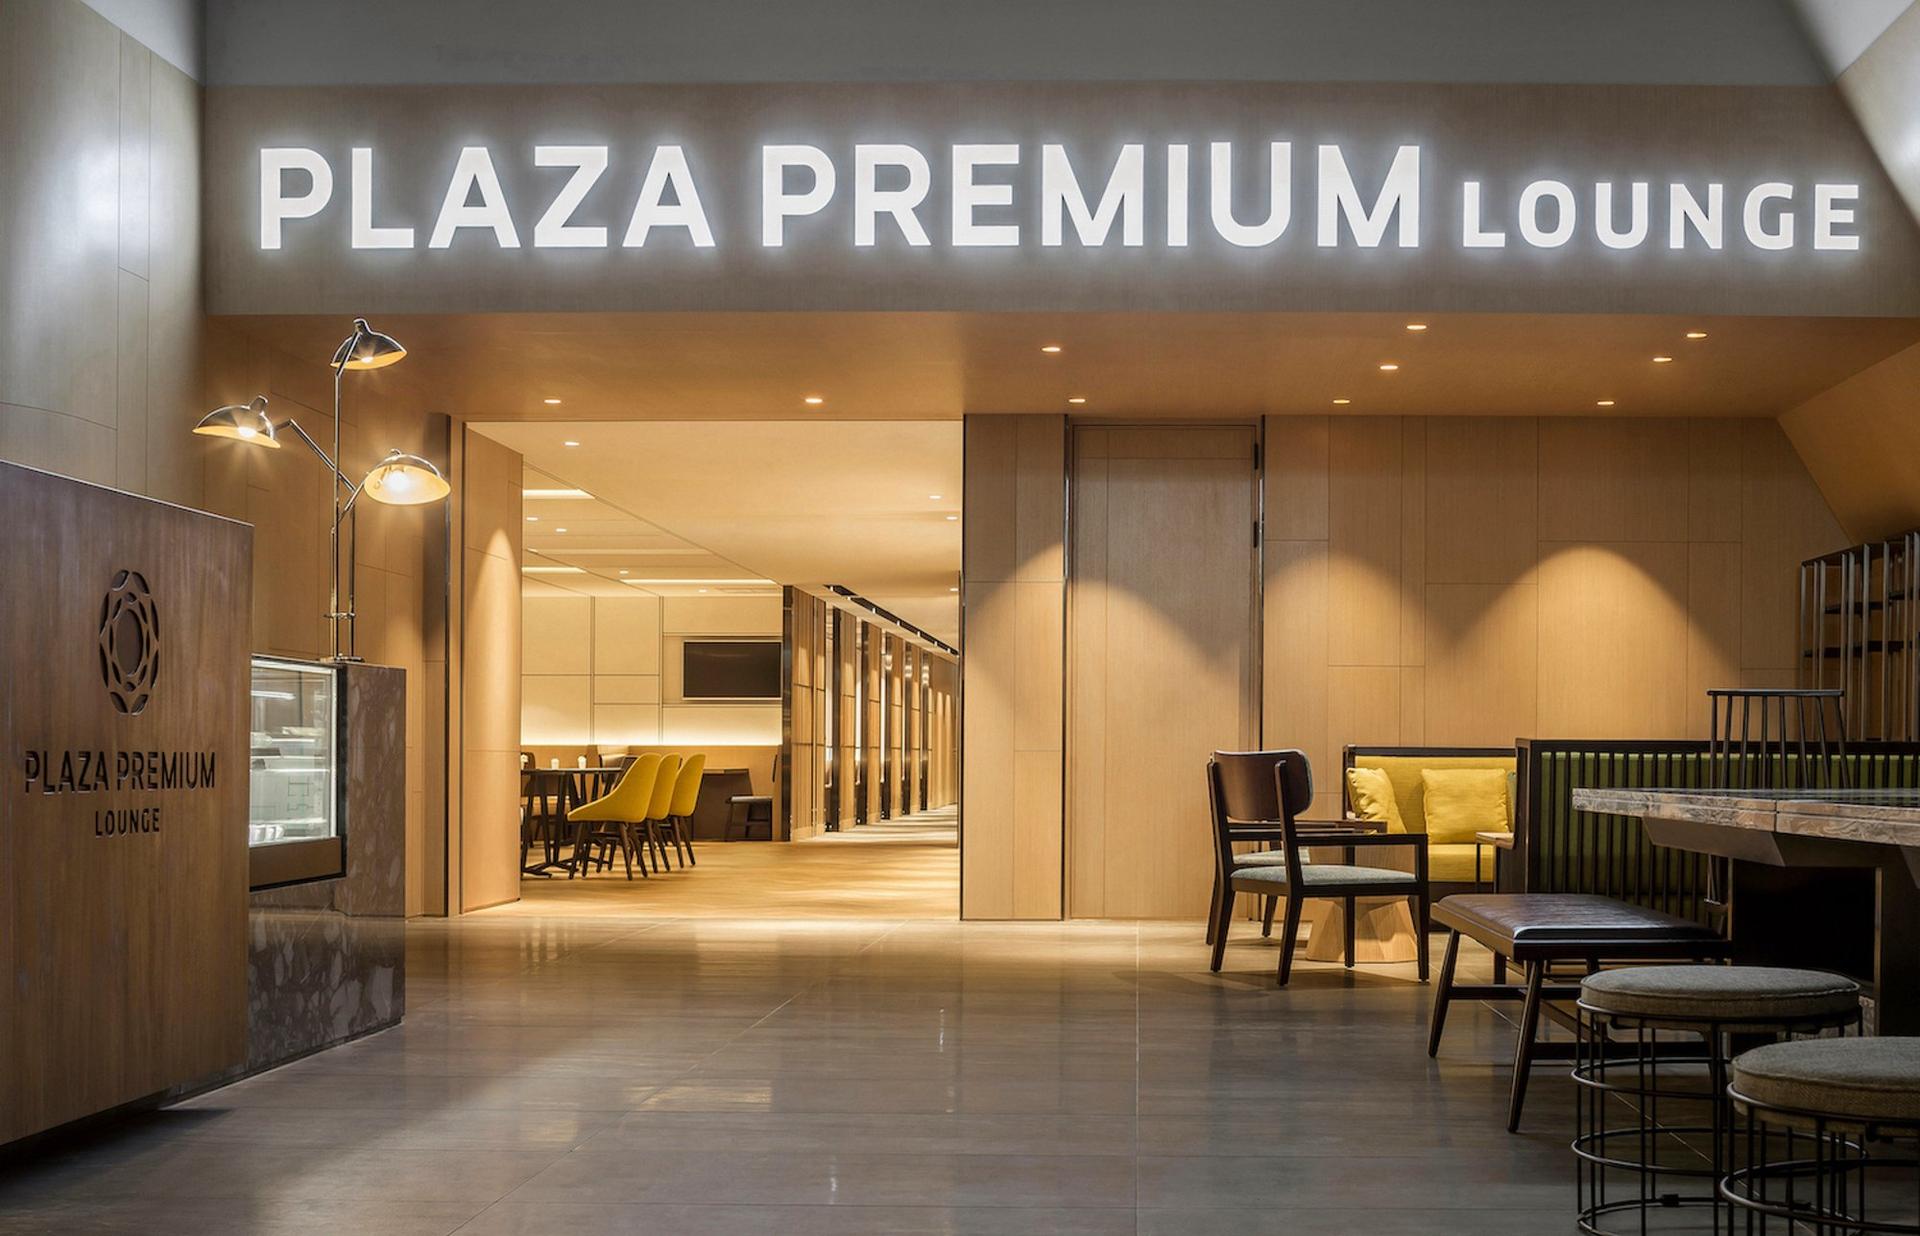 Plaza Premium Lounge (Zone A) image 65 of 99